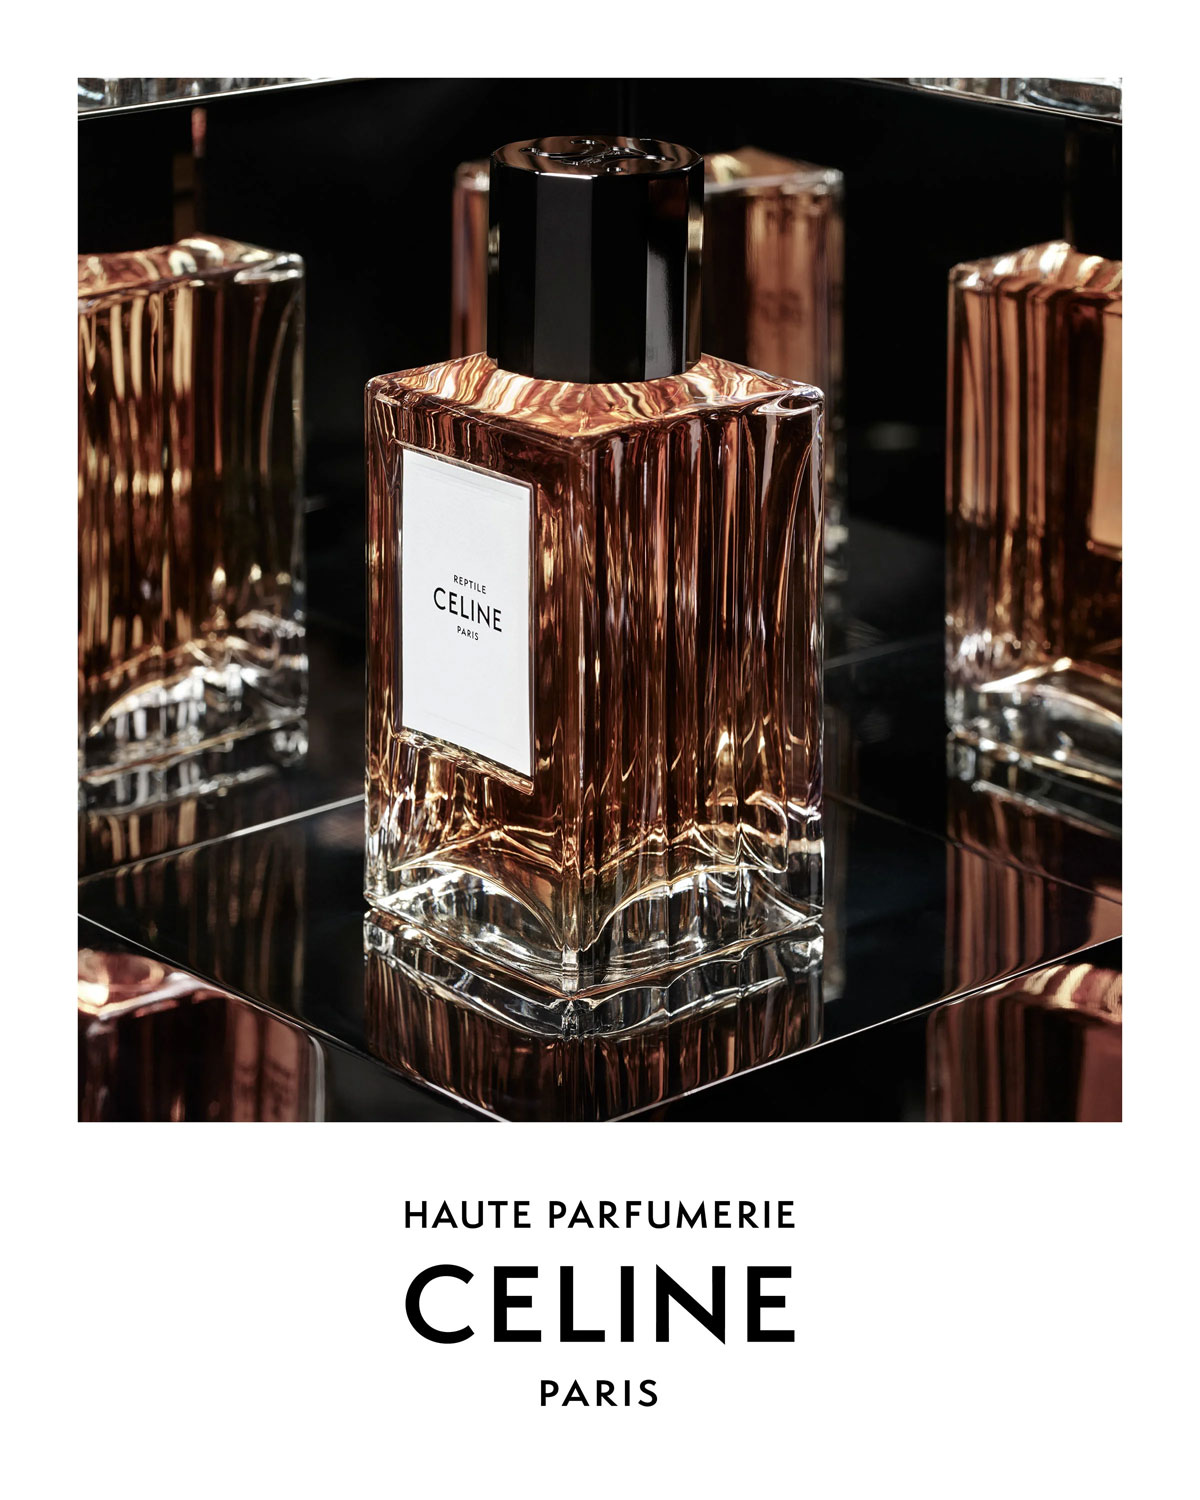 Celine Haute Parfumerie Ad